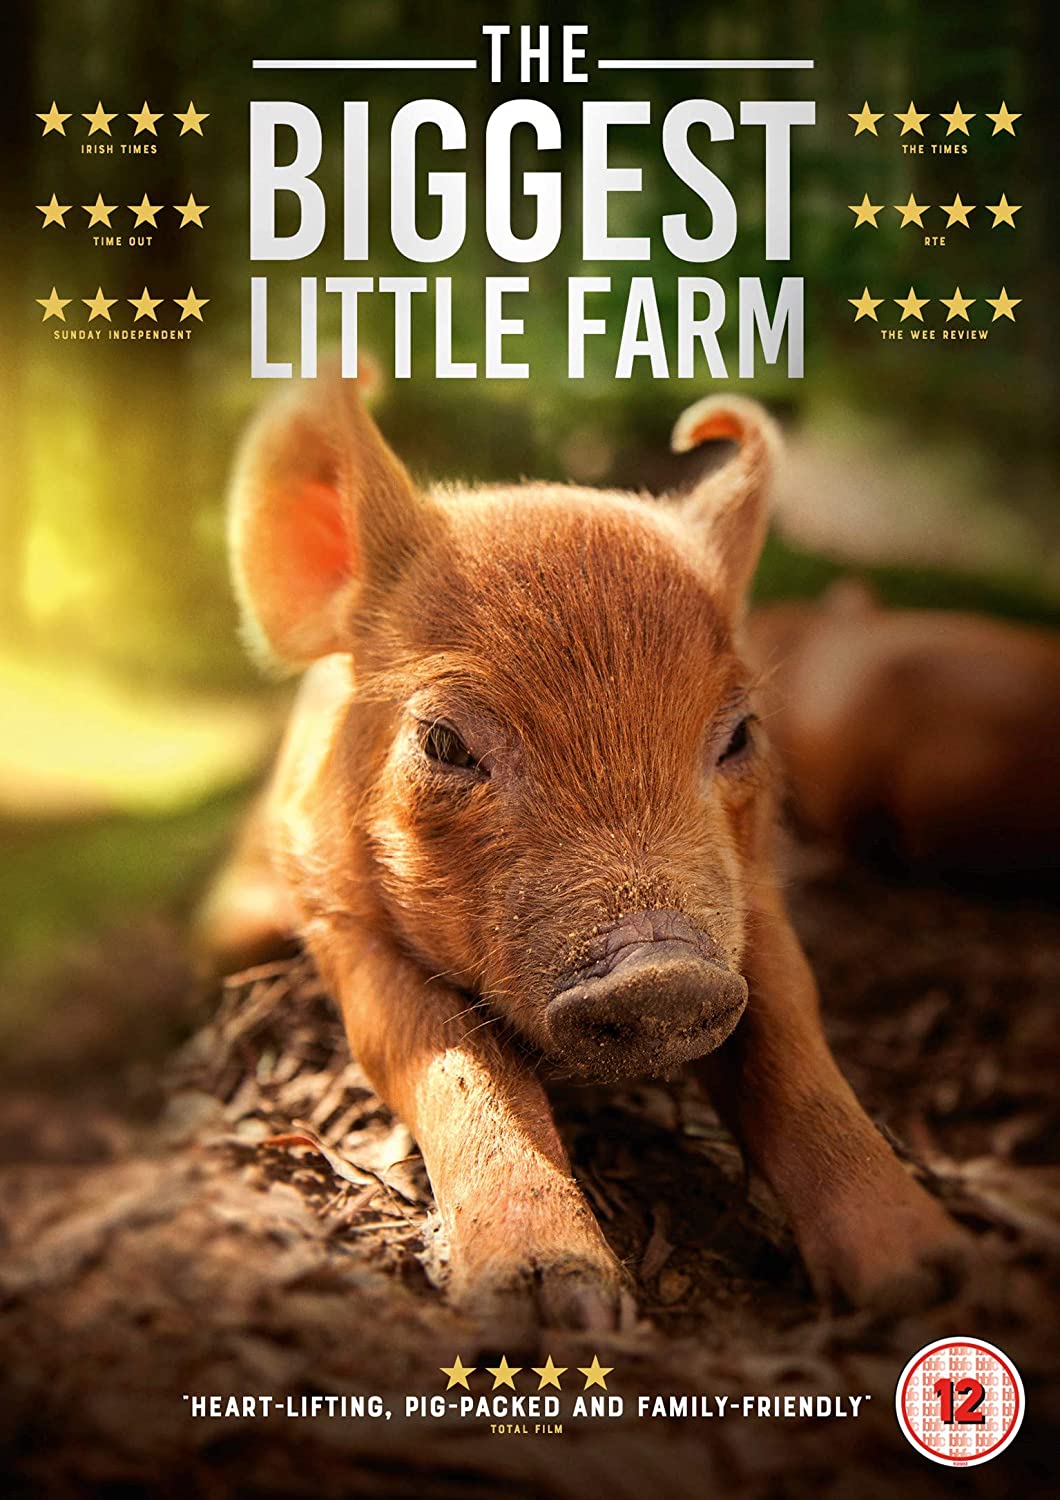 The Biggest Little Farm - Documentary [DVD]